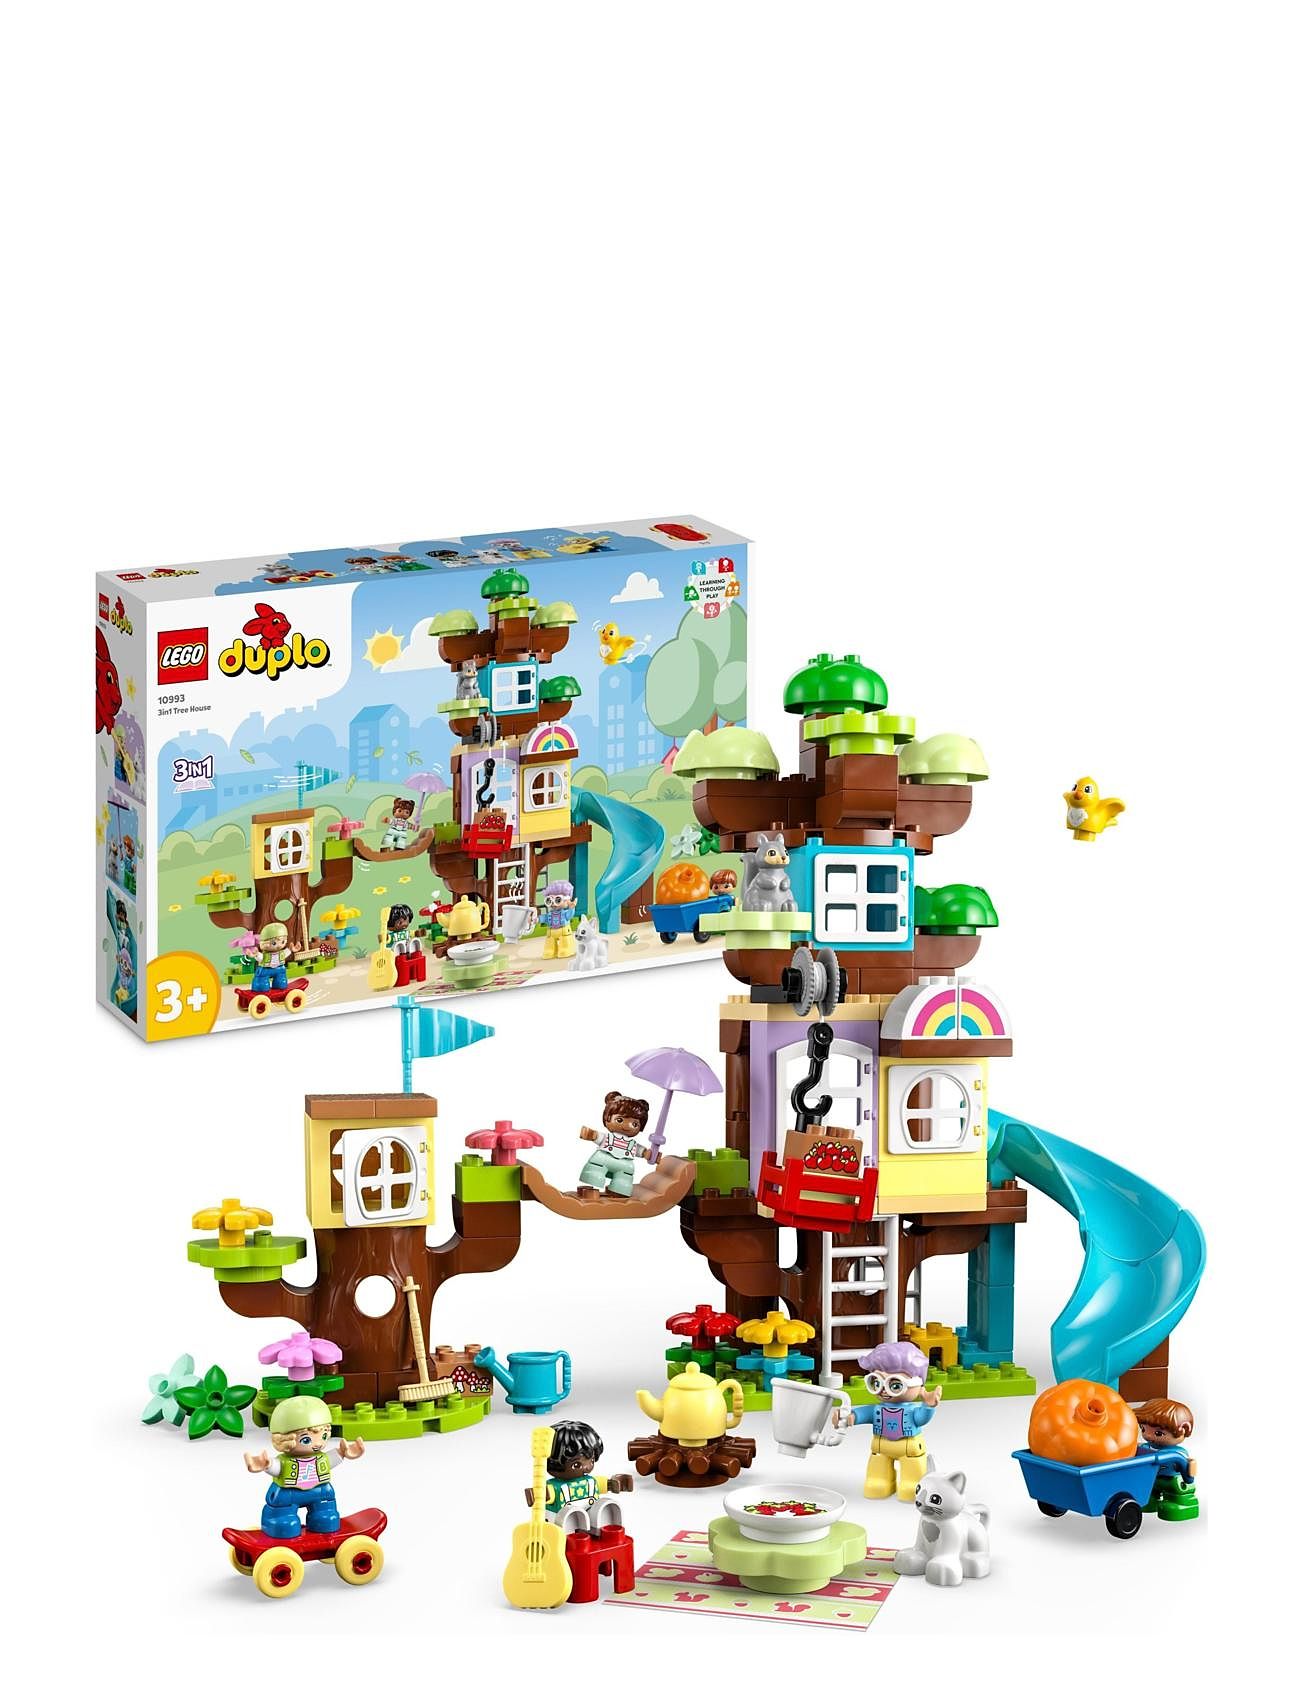 3In1 Tree House Set With Animal Figures Toys Lego Toys Lego duplo Multi/patterned LEGO